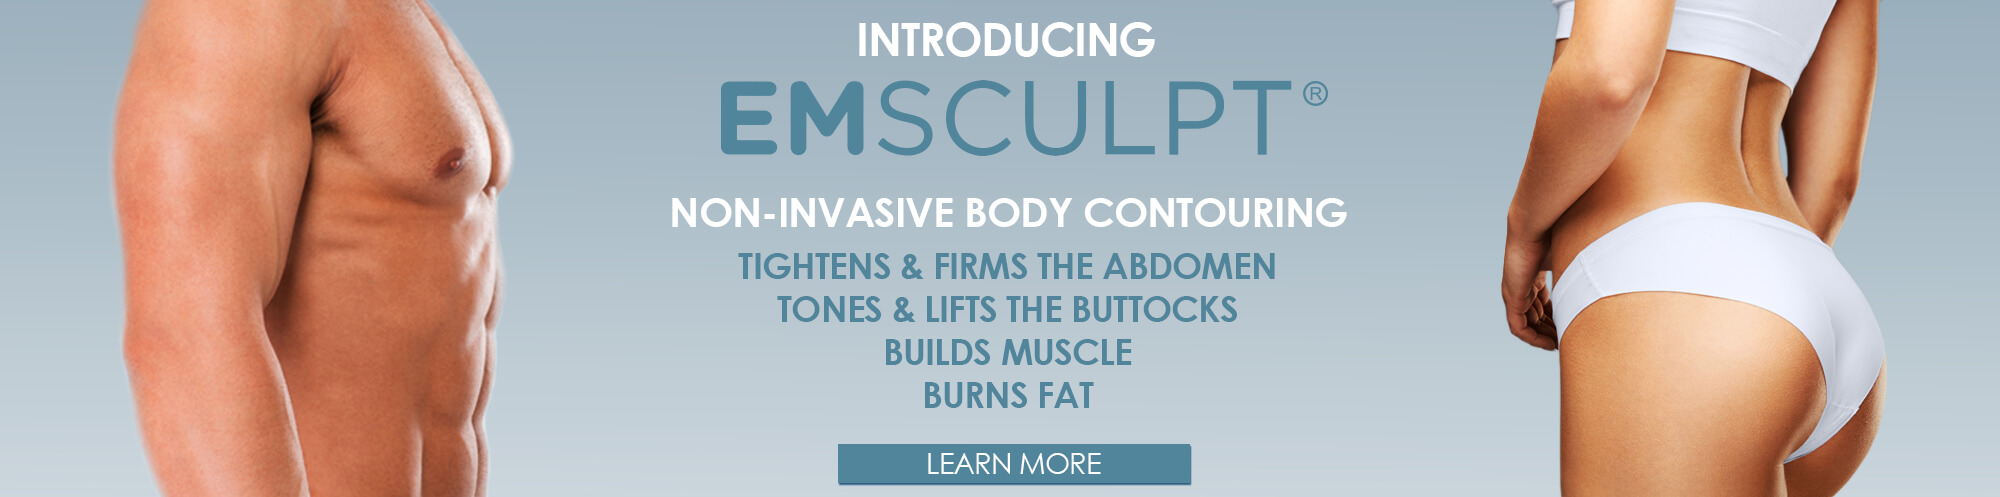 EMSculpt Non-Invasive Body Contouring